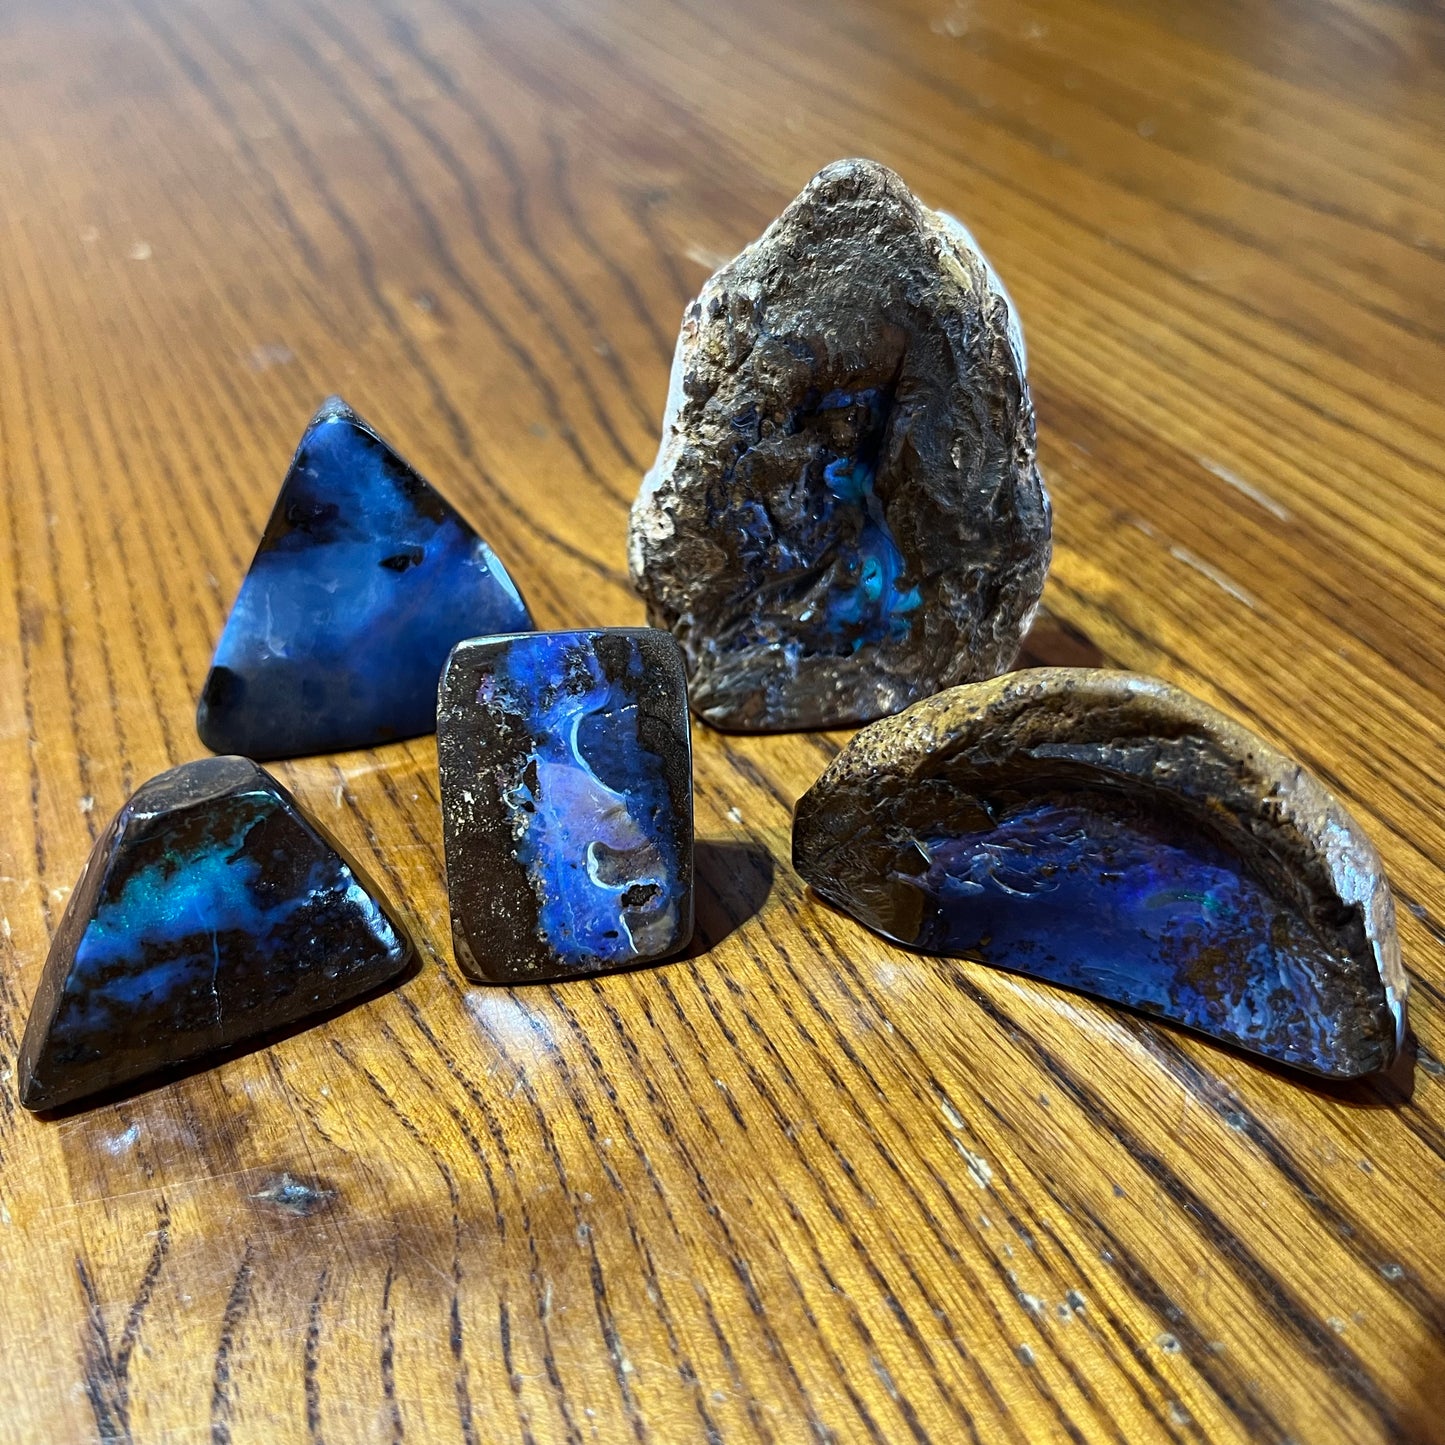 30 g mini boulder opal specimen